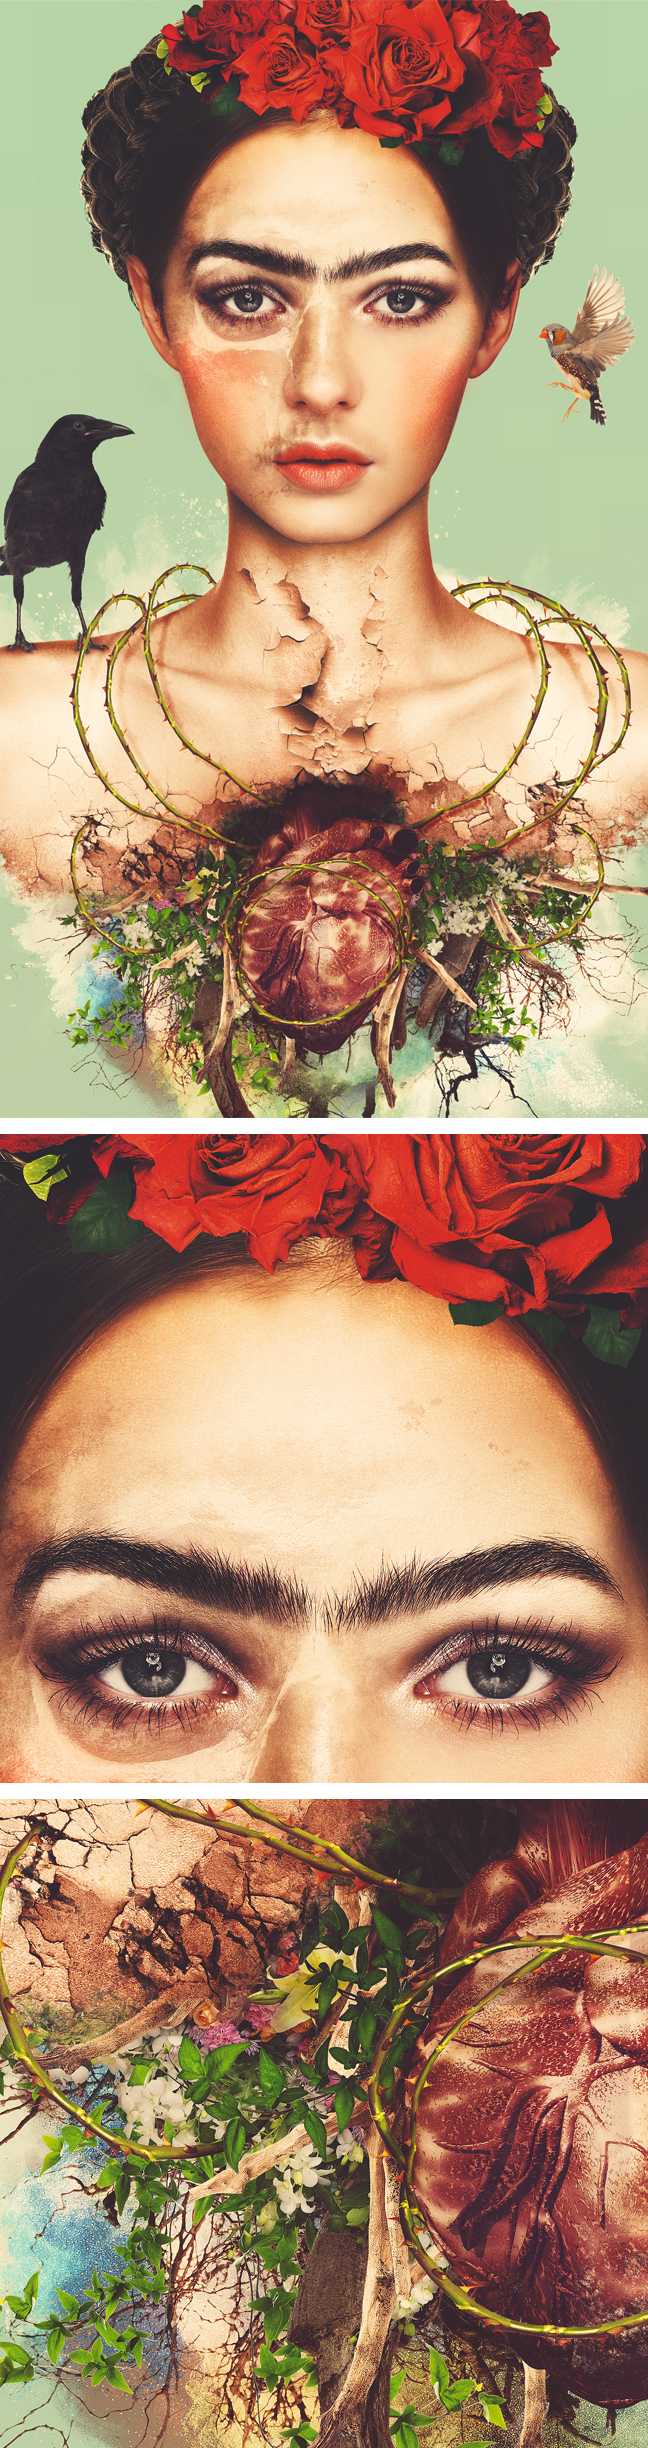 Digital Art  Creativity passion Frida Kahlo beauty Photography  capture